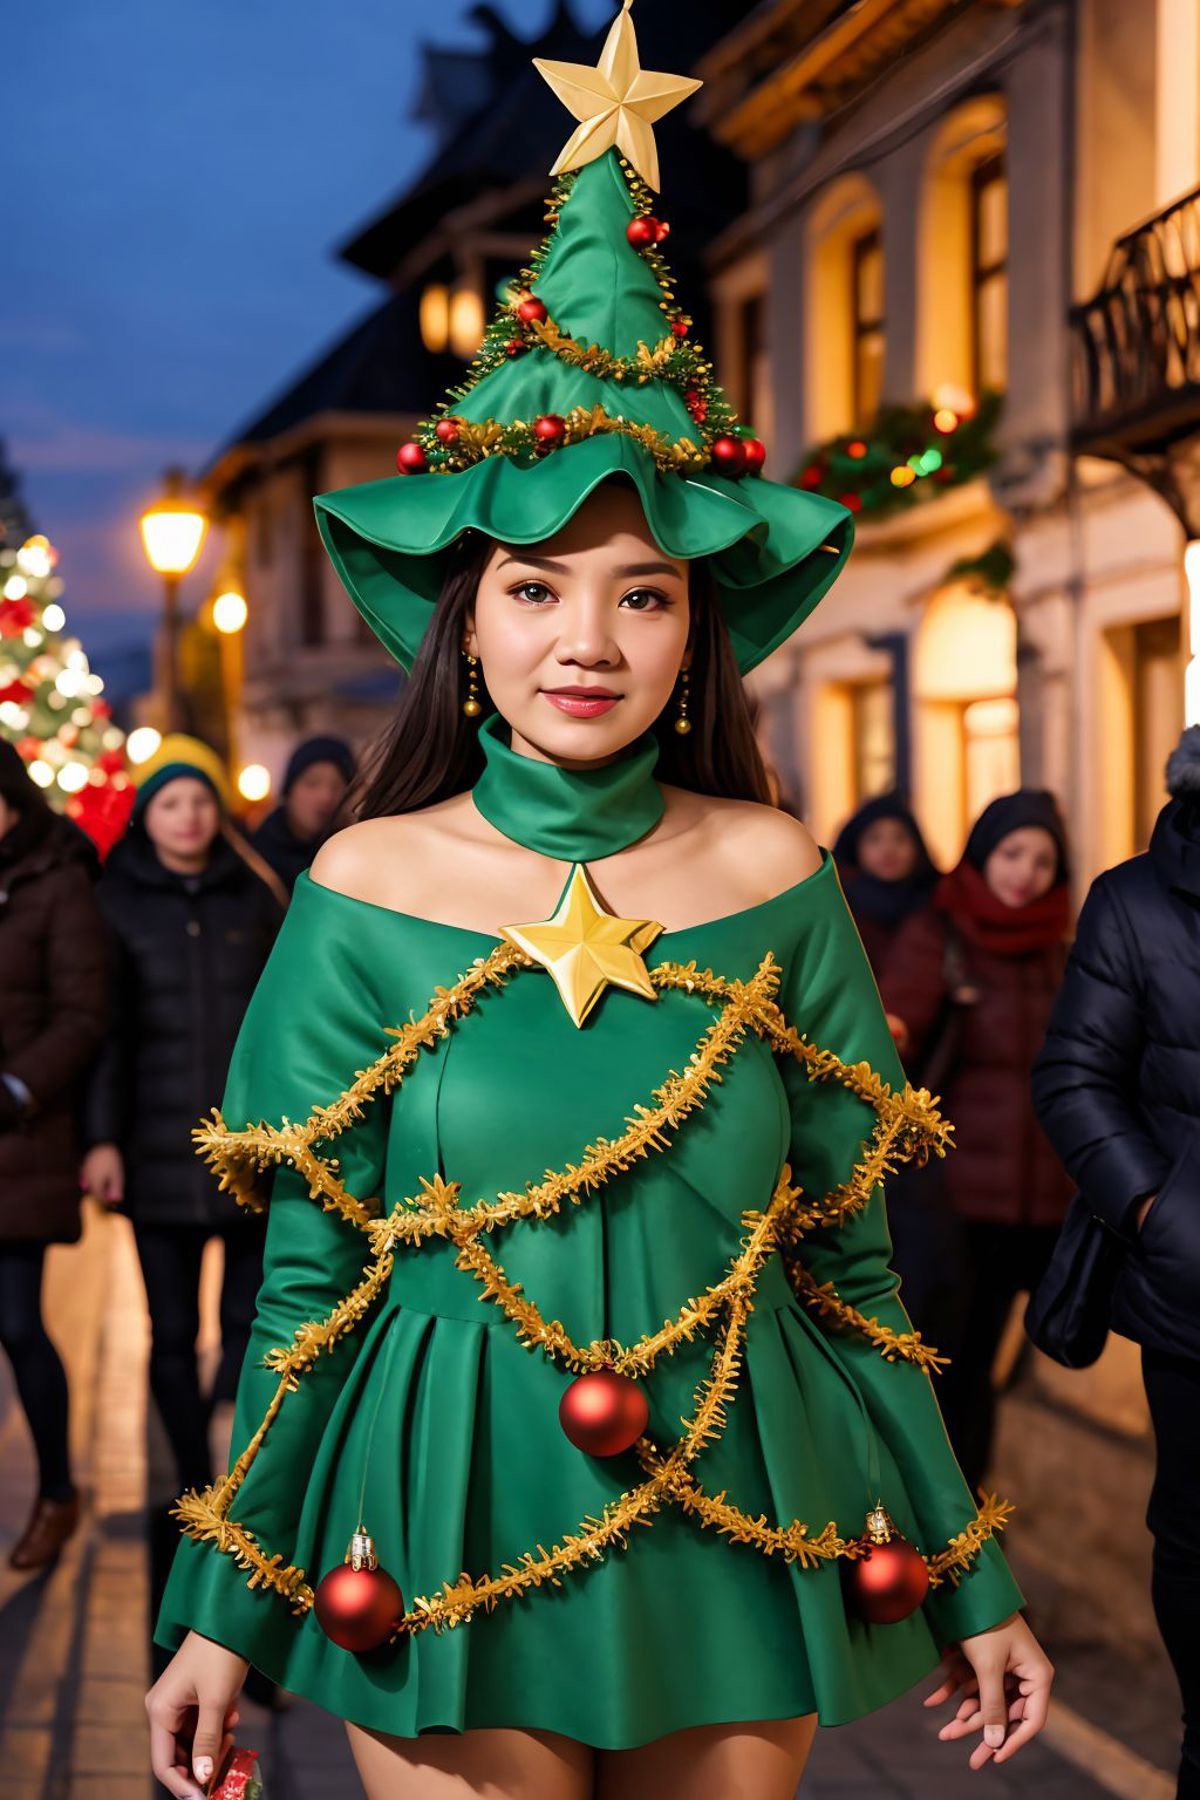 Christmas Tree Dress image by Montitto